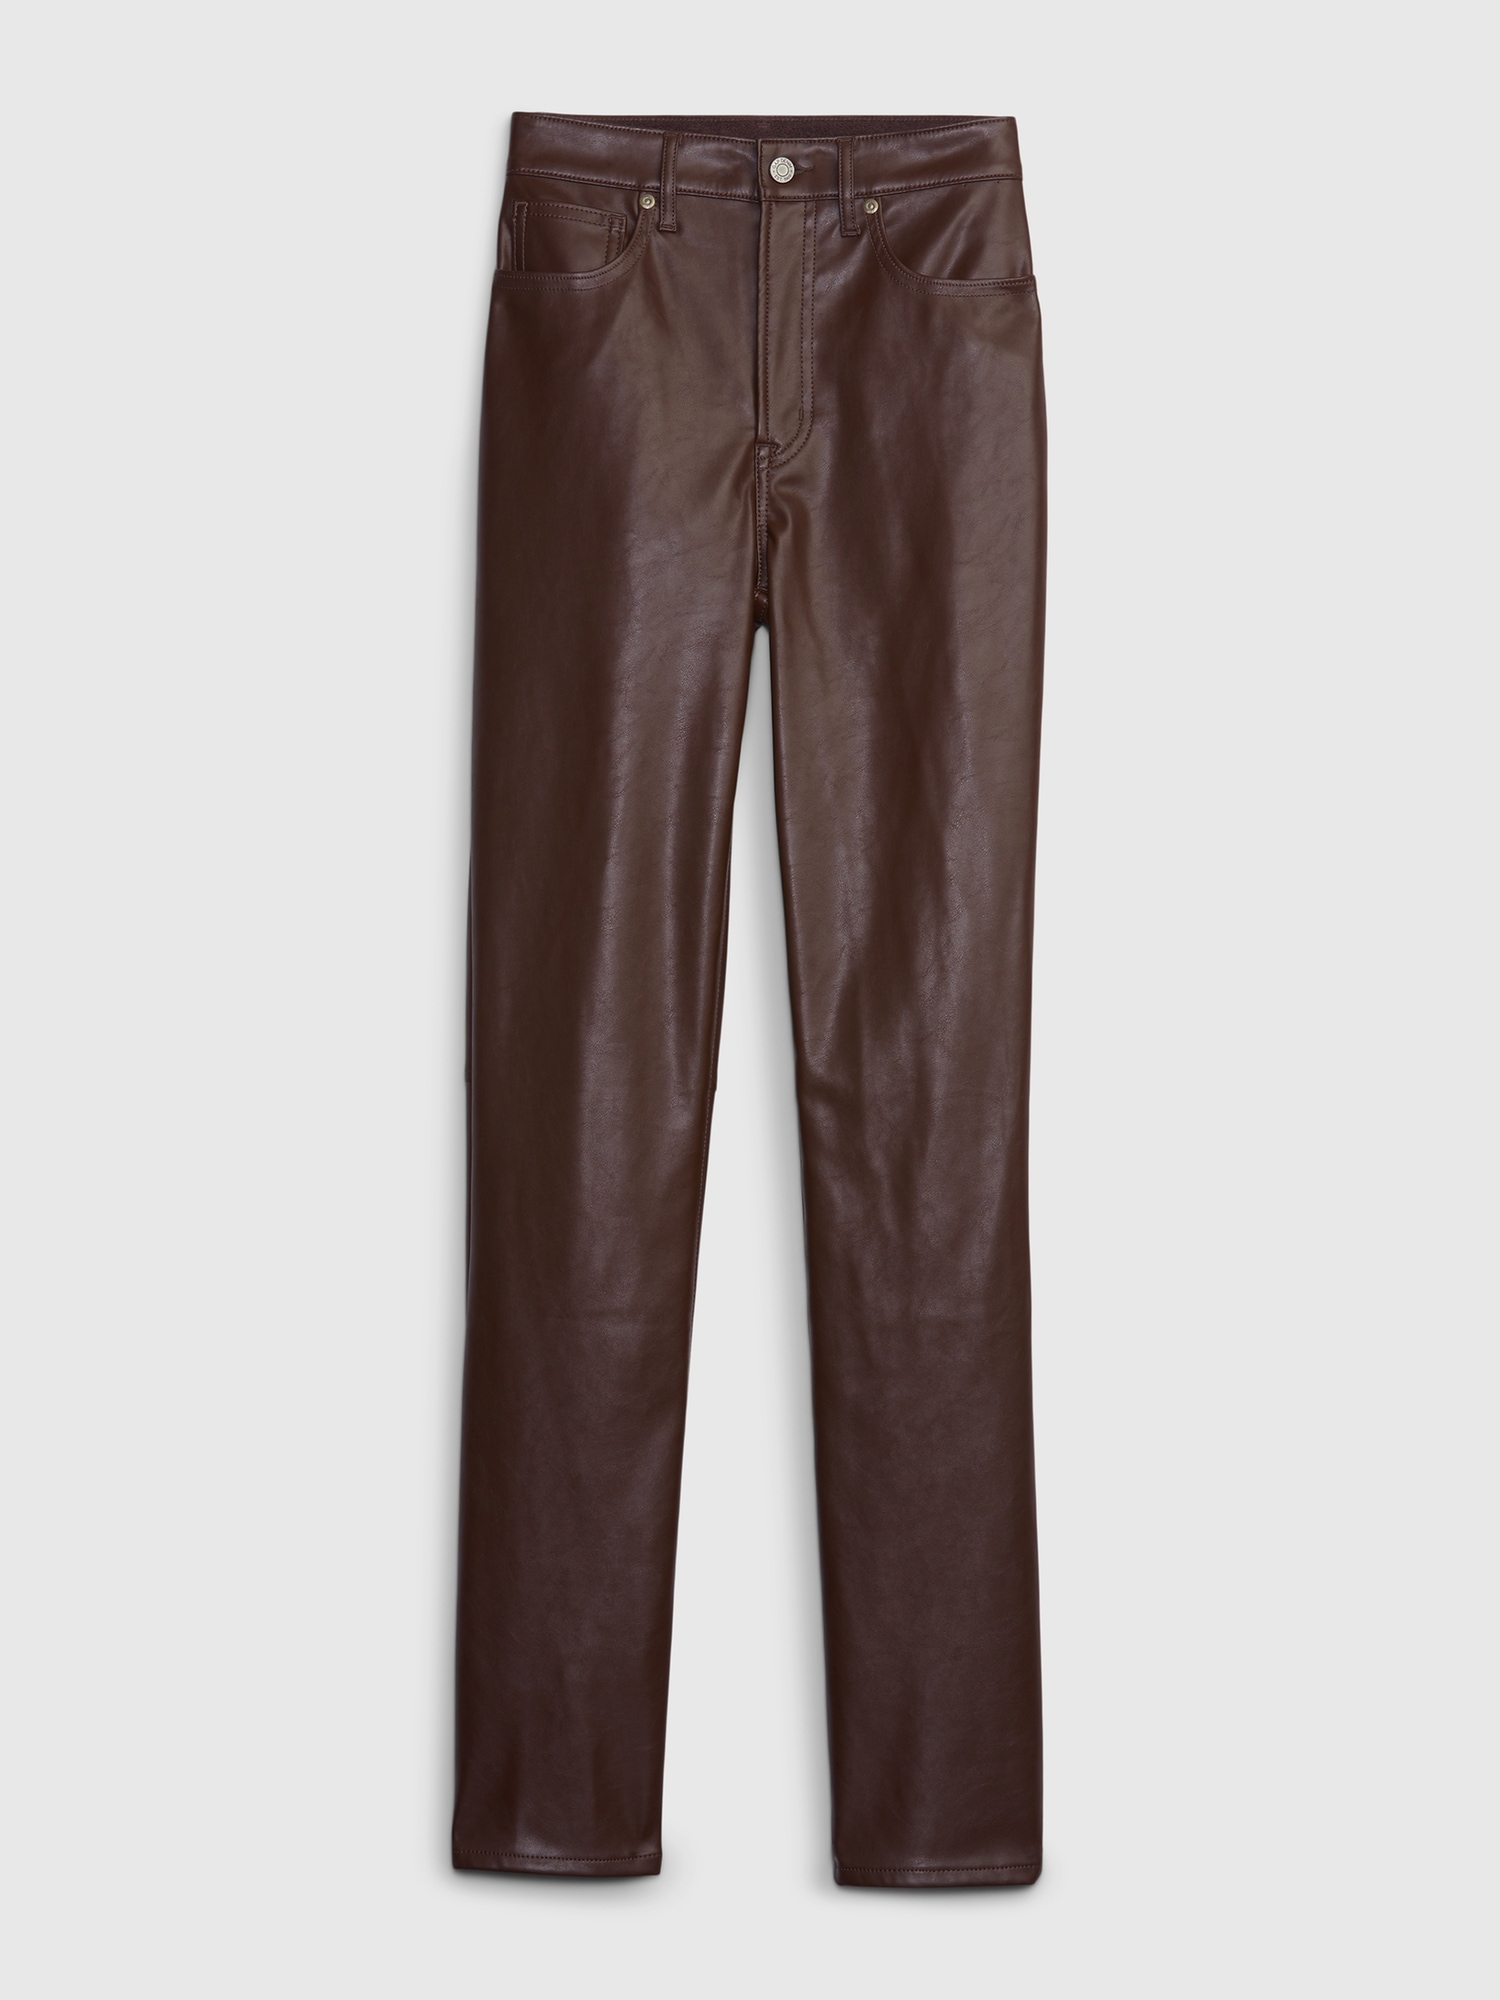 GAP PURE LEATHER PANTS (unused)  Leather pants, Pants, Clothes design